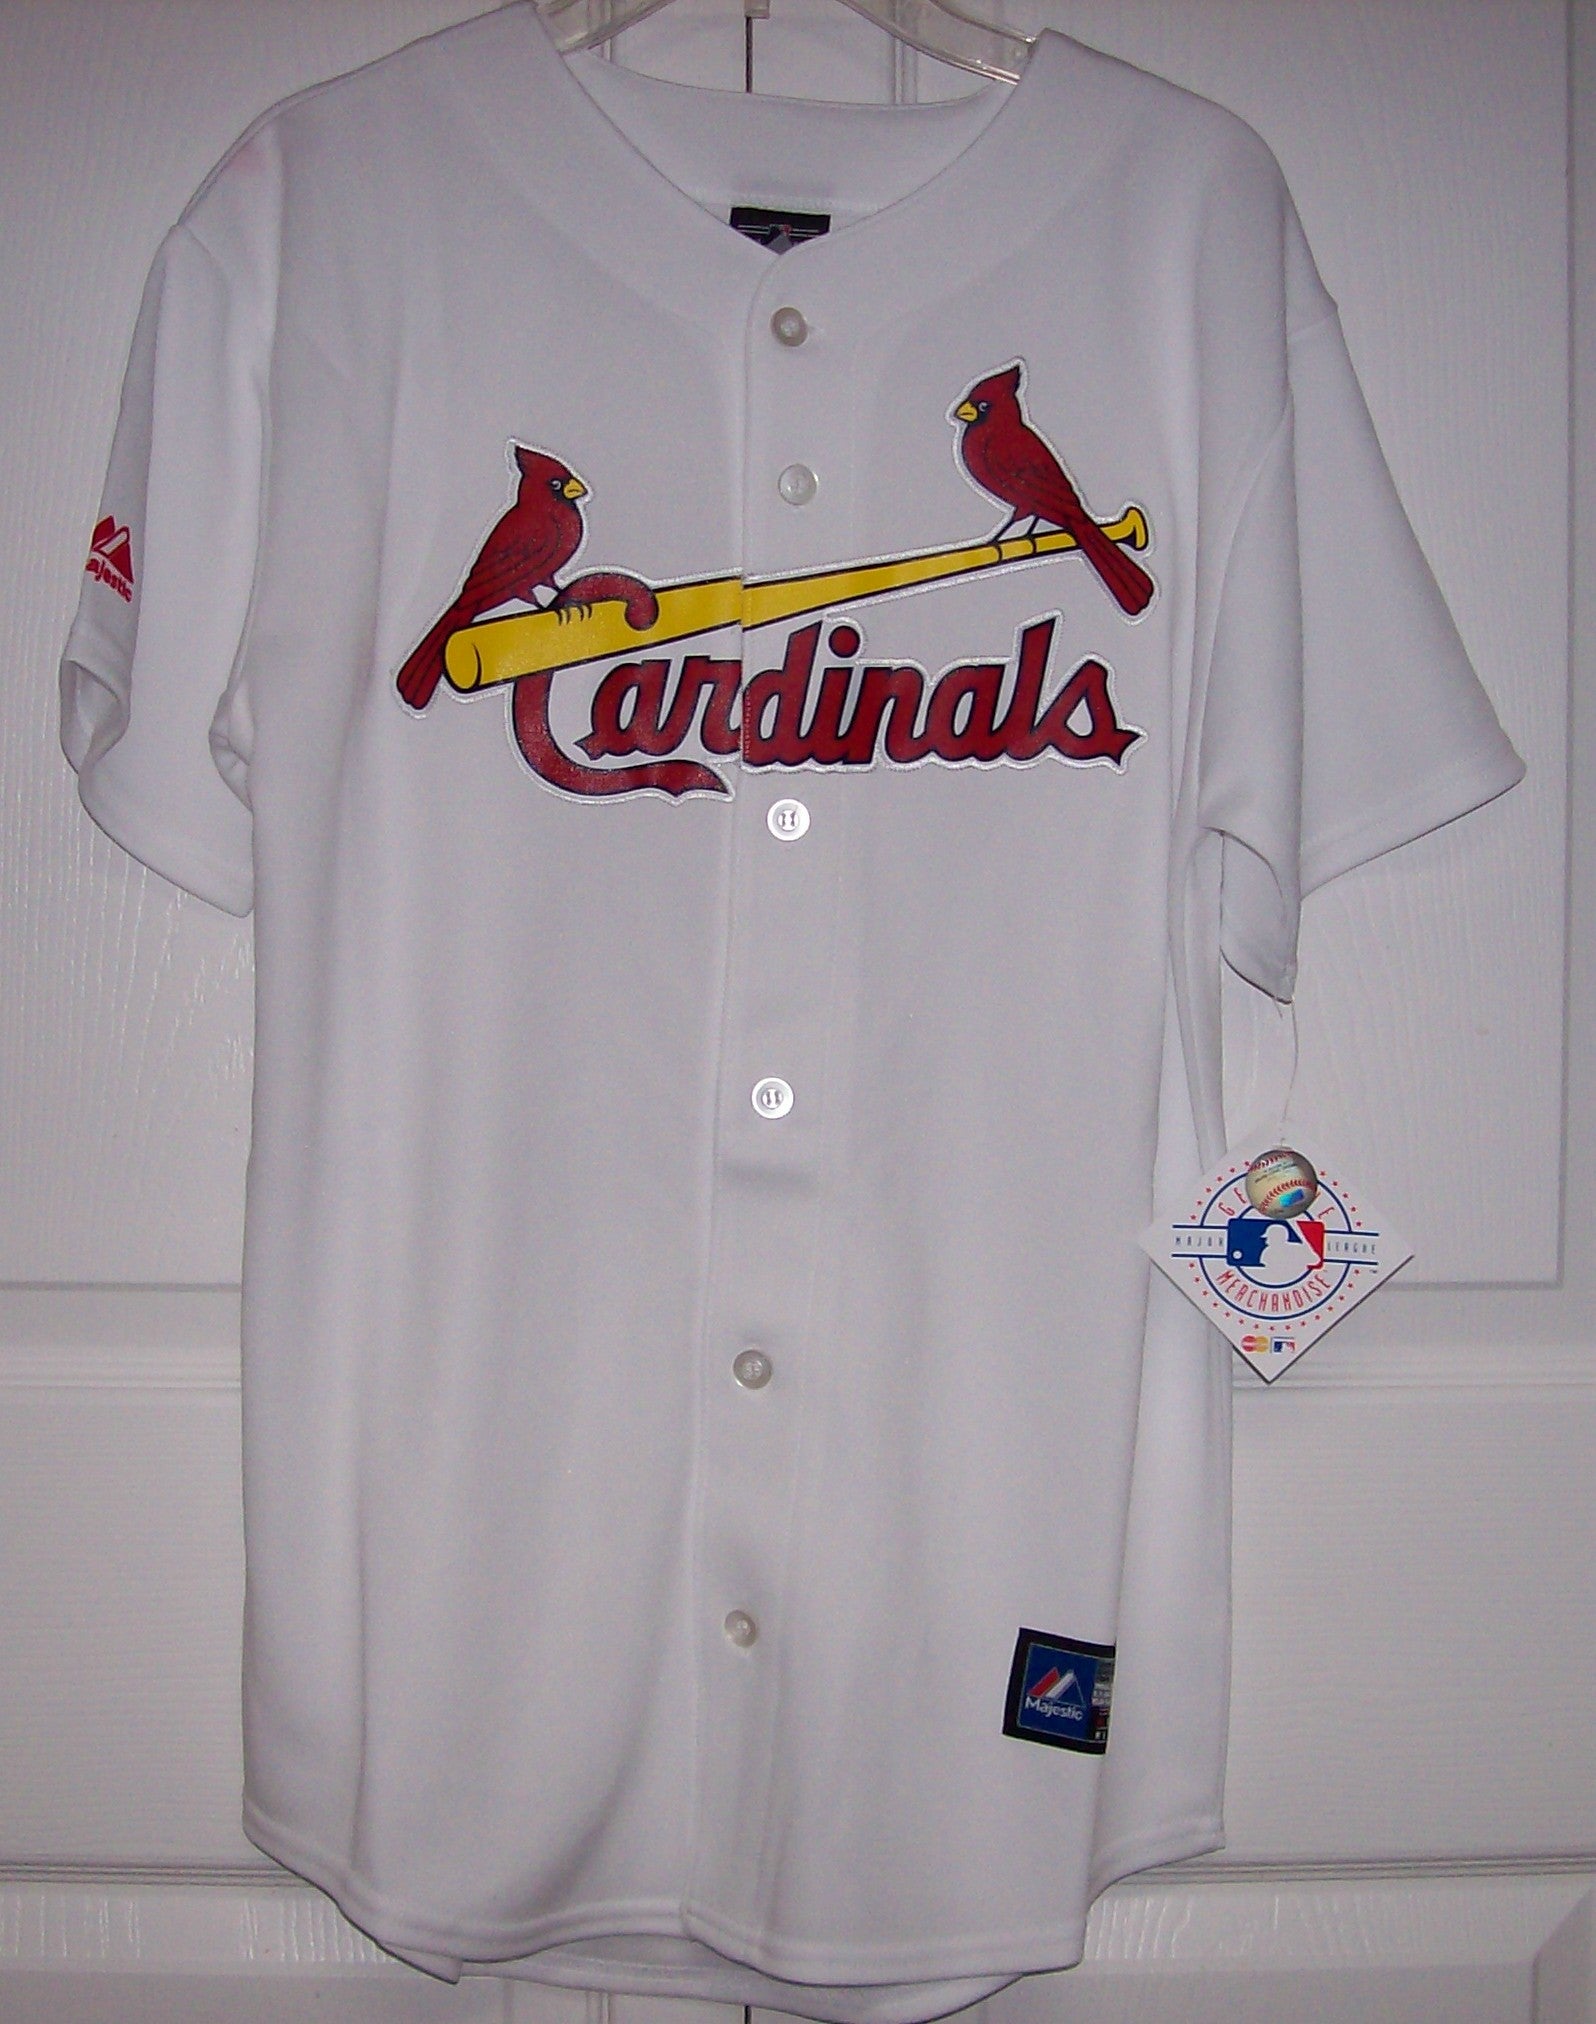 MOLINA St. Louis Cardinals INFANT Majestic MLB Baseball jersey